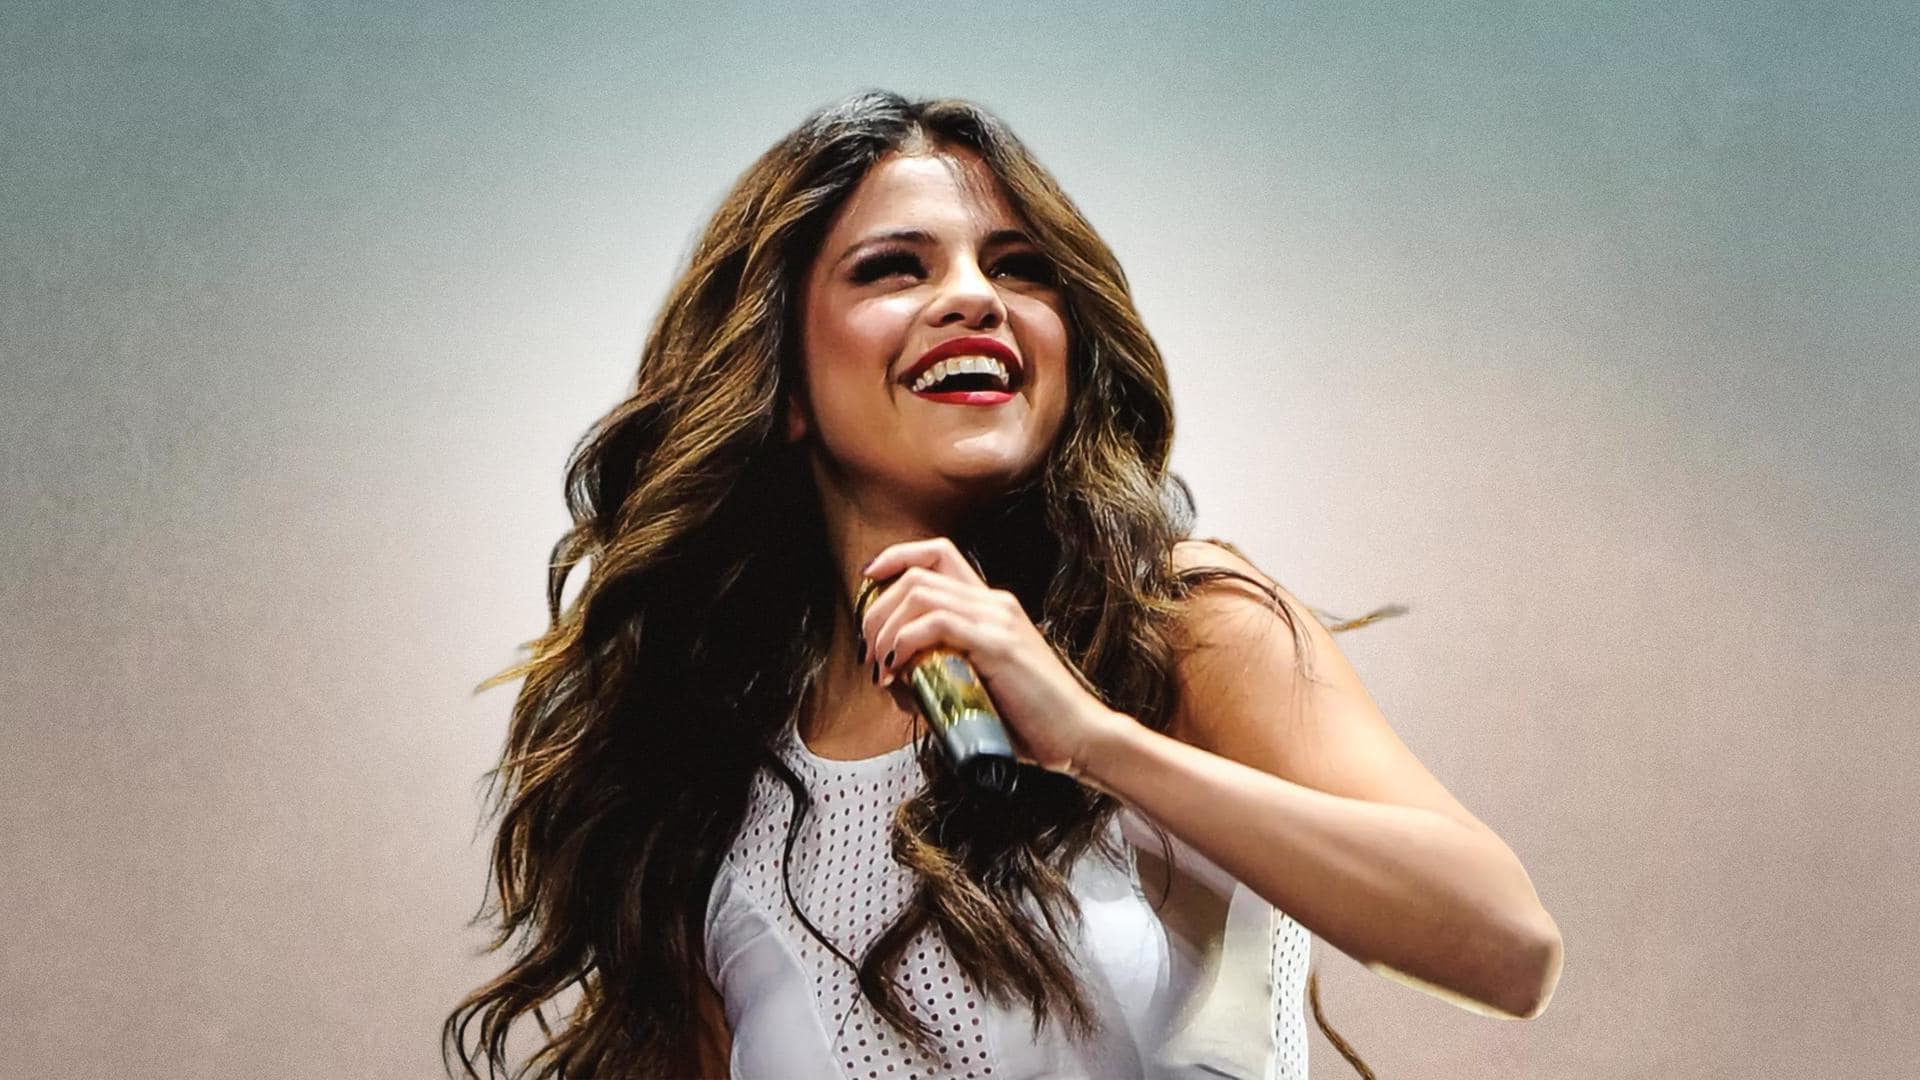 Justin Bieber, Hailey Baldwin taunted with 'Selena' chant at Met Gala